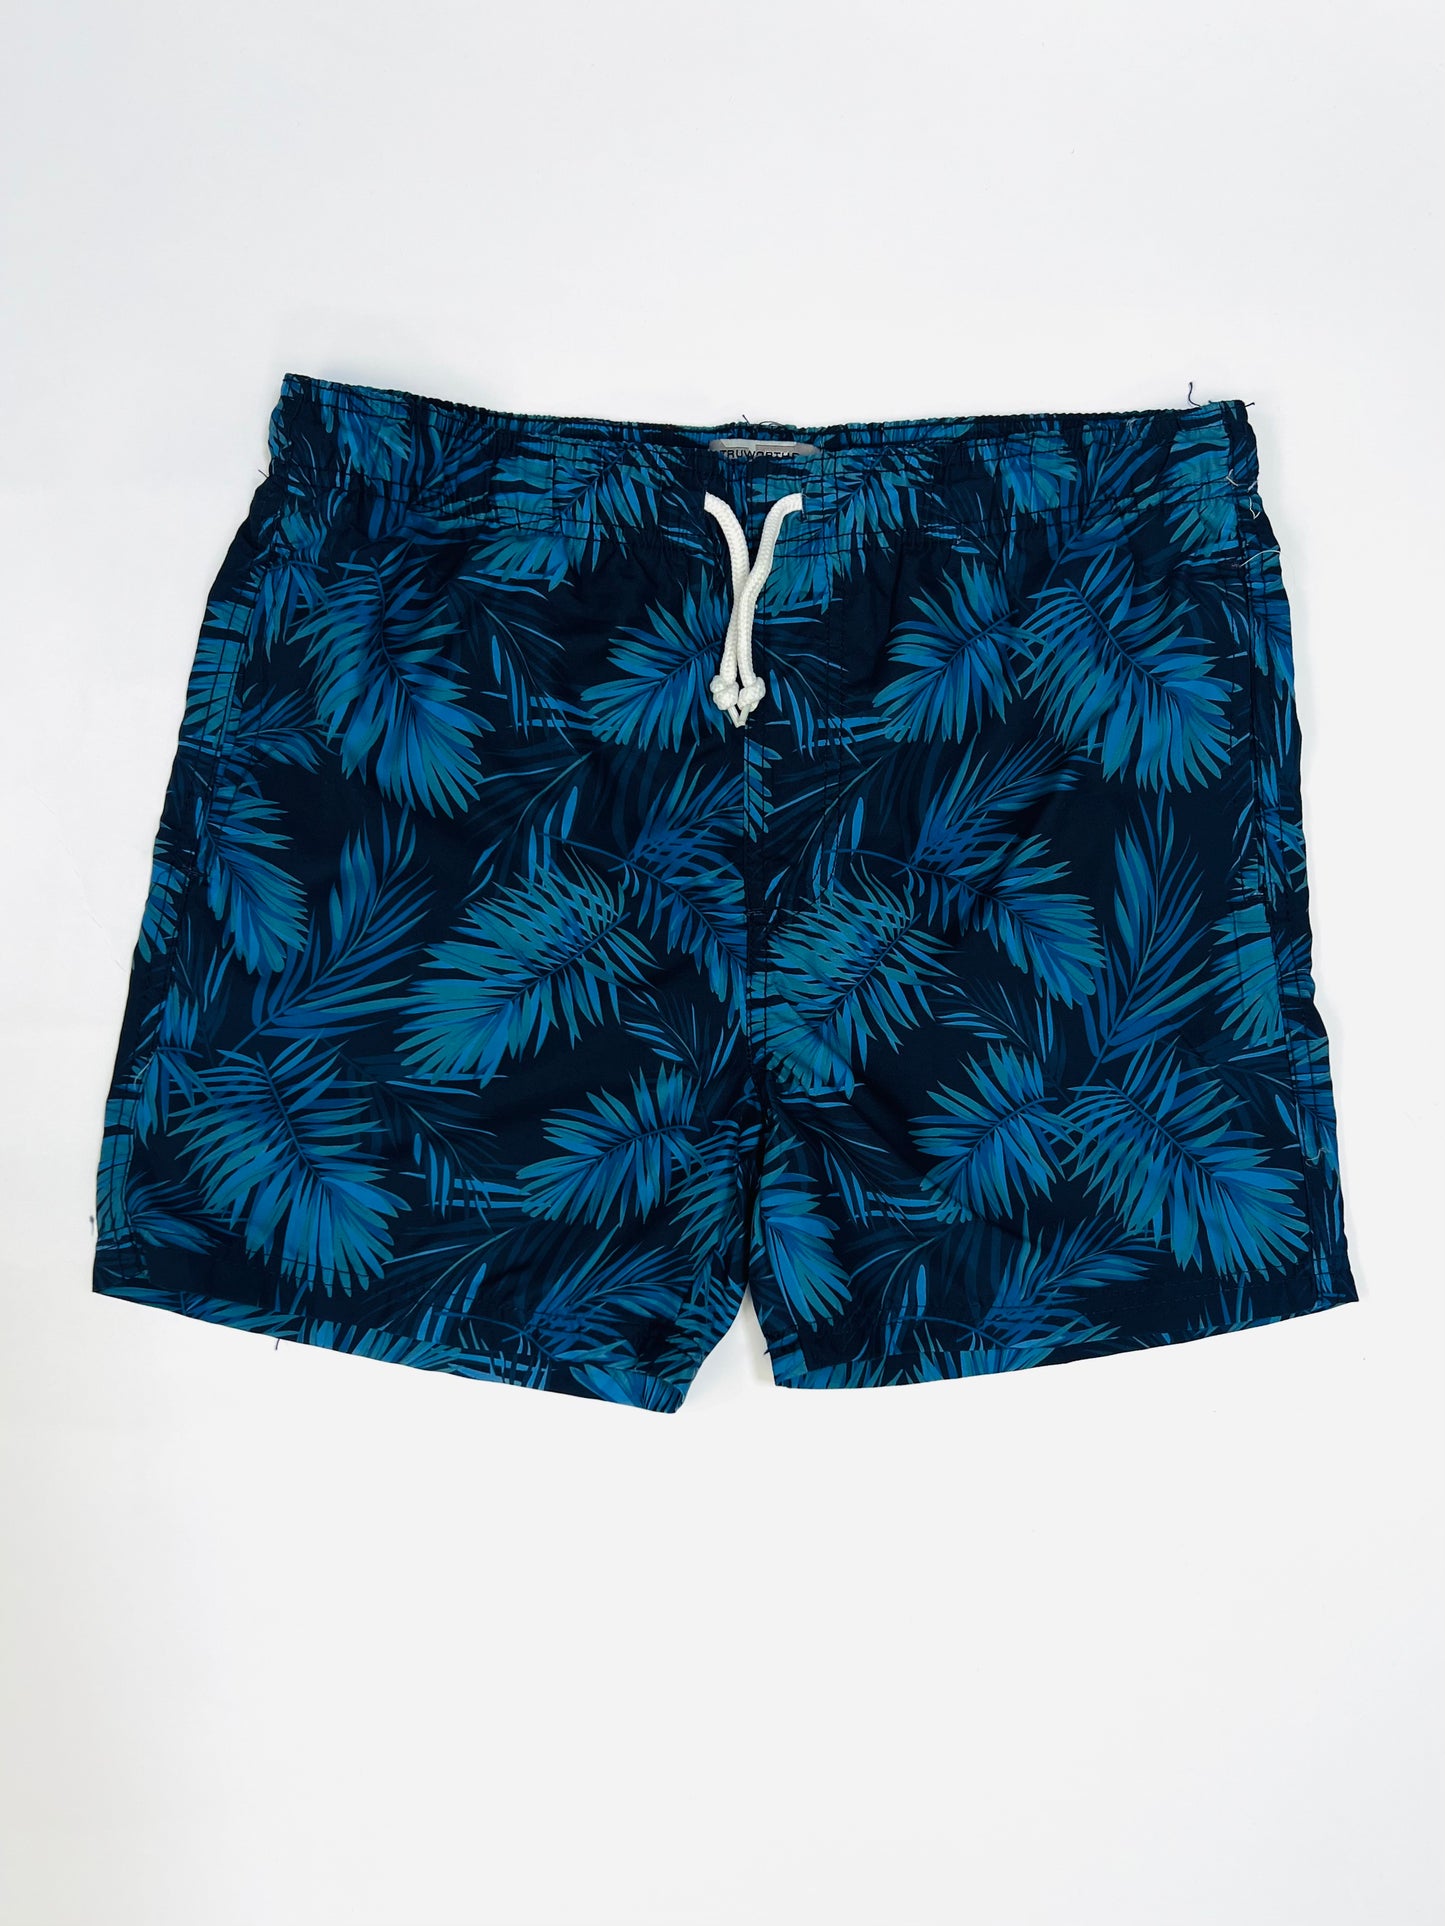 Truworths Man print swim shorts in blue